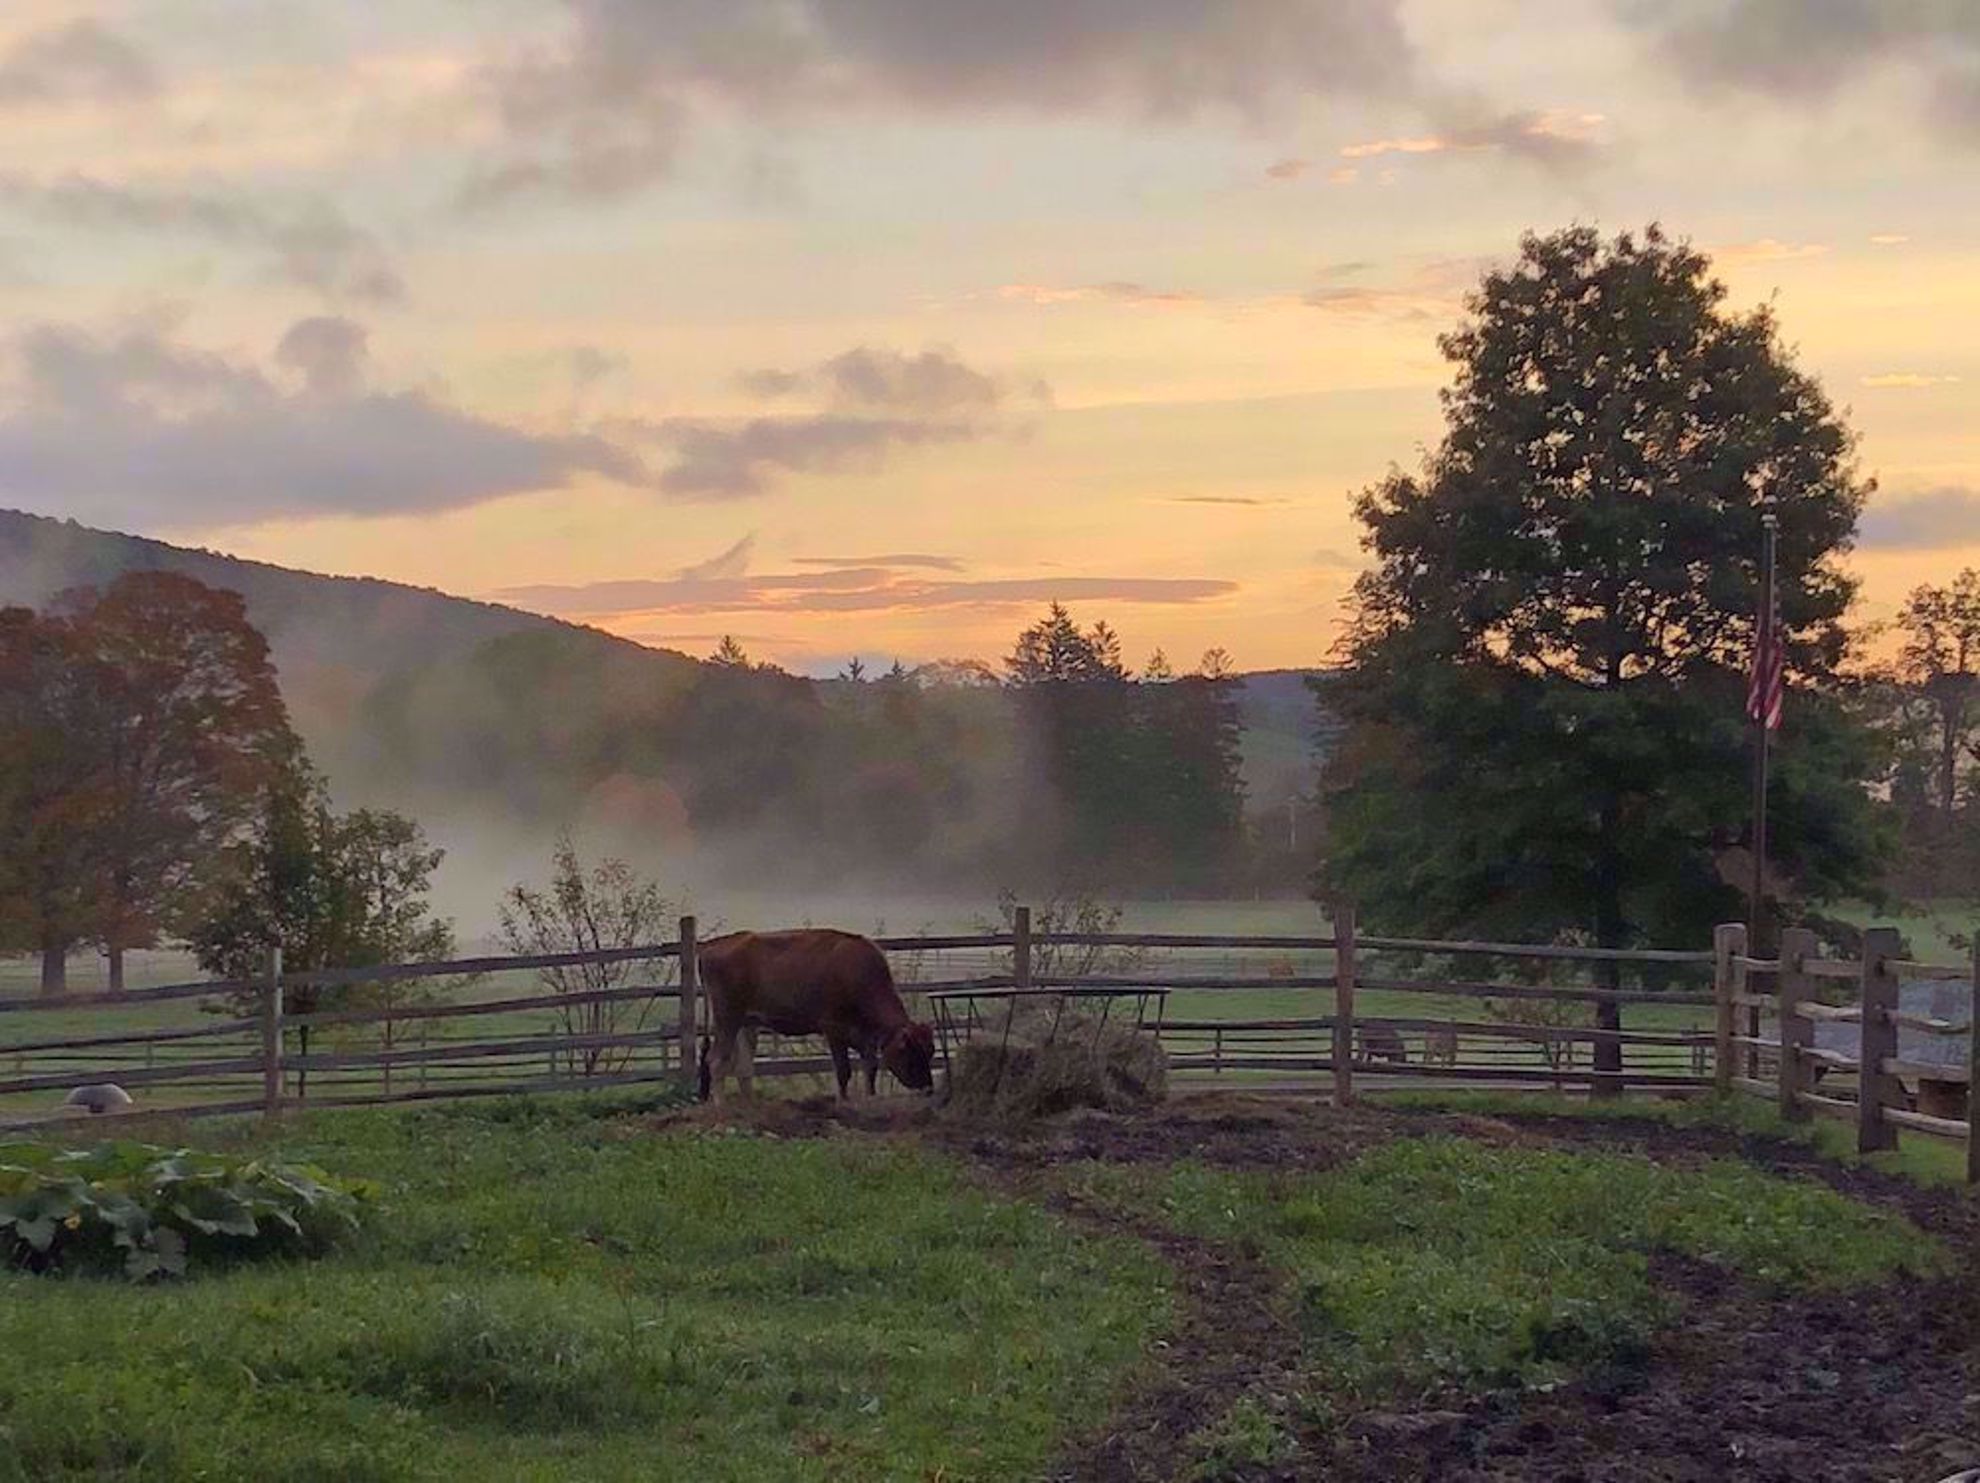 Billings Farm cows at sunrise